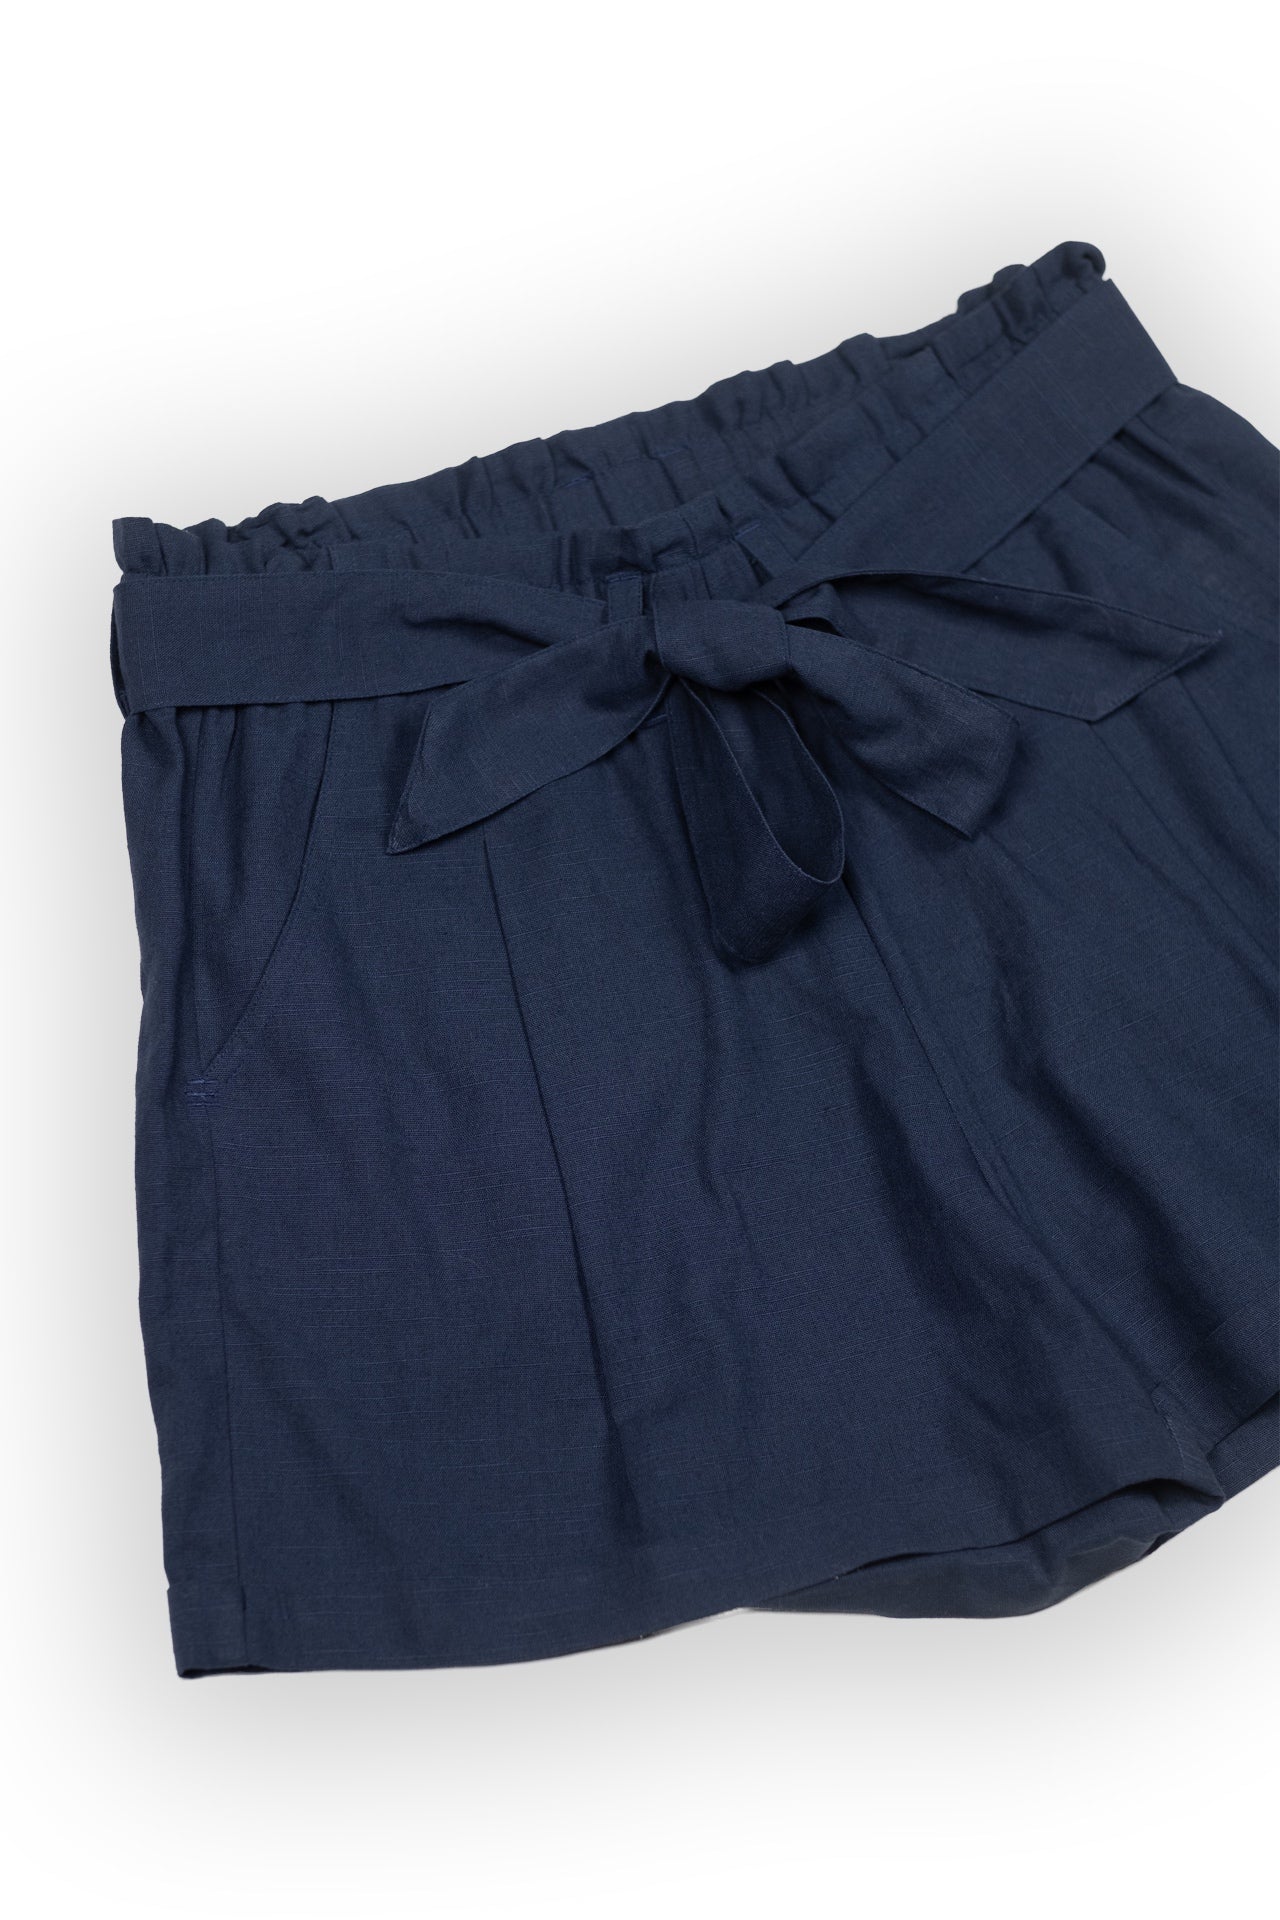 Mabel Navy Paperbag Waist Shorts - Rupert and Buckley - Shorts